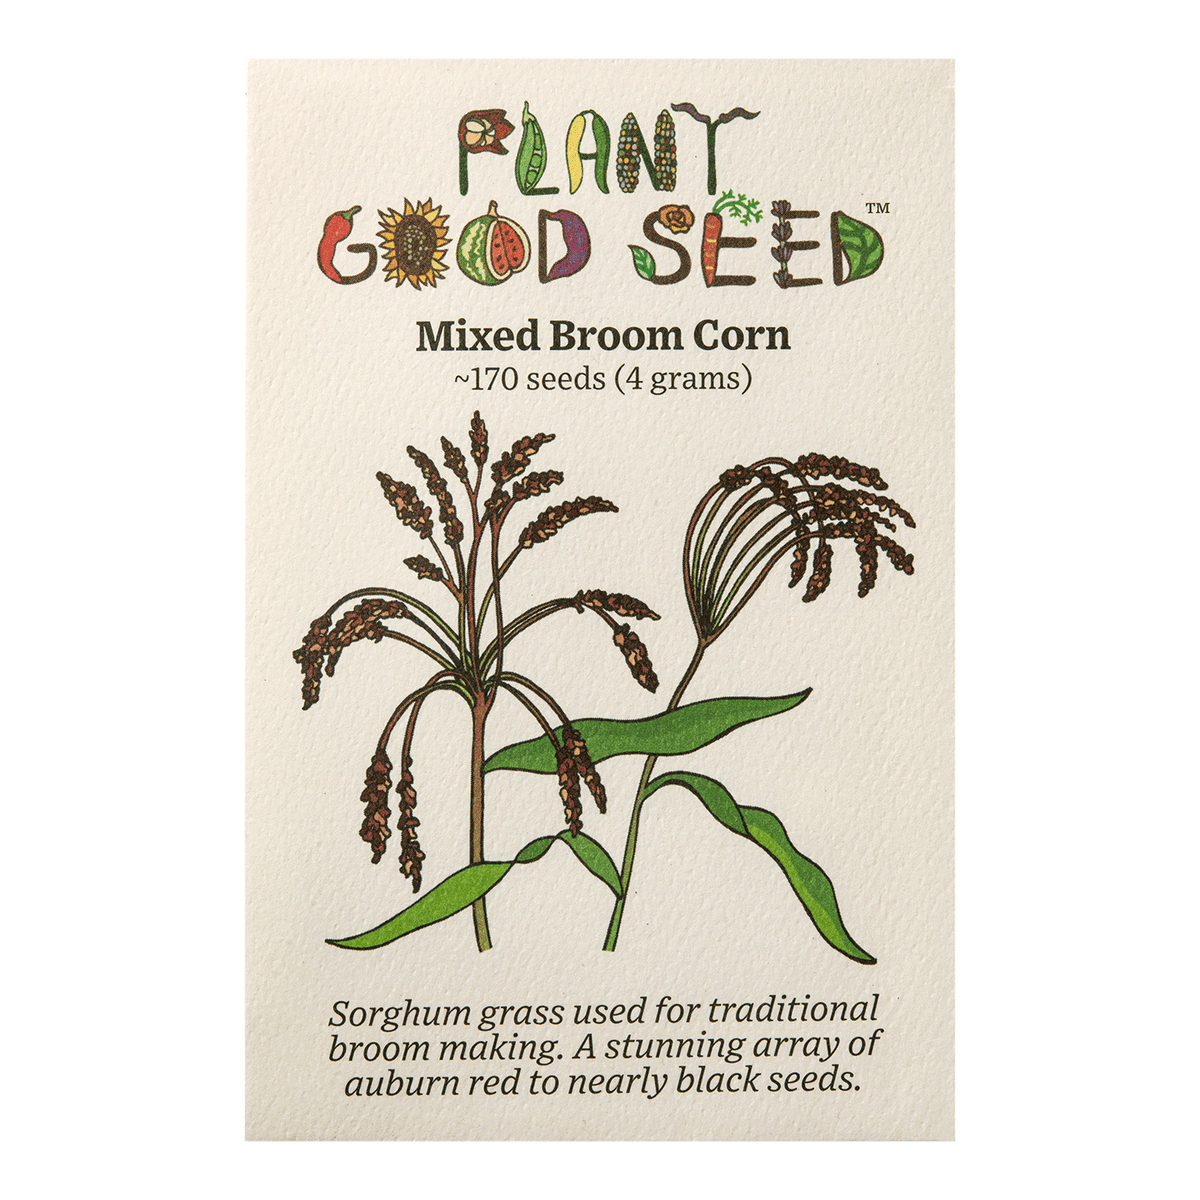 Mixed Broom Corn Sorghum bicolor Seed Packet